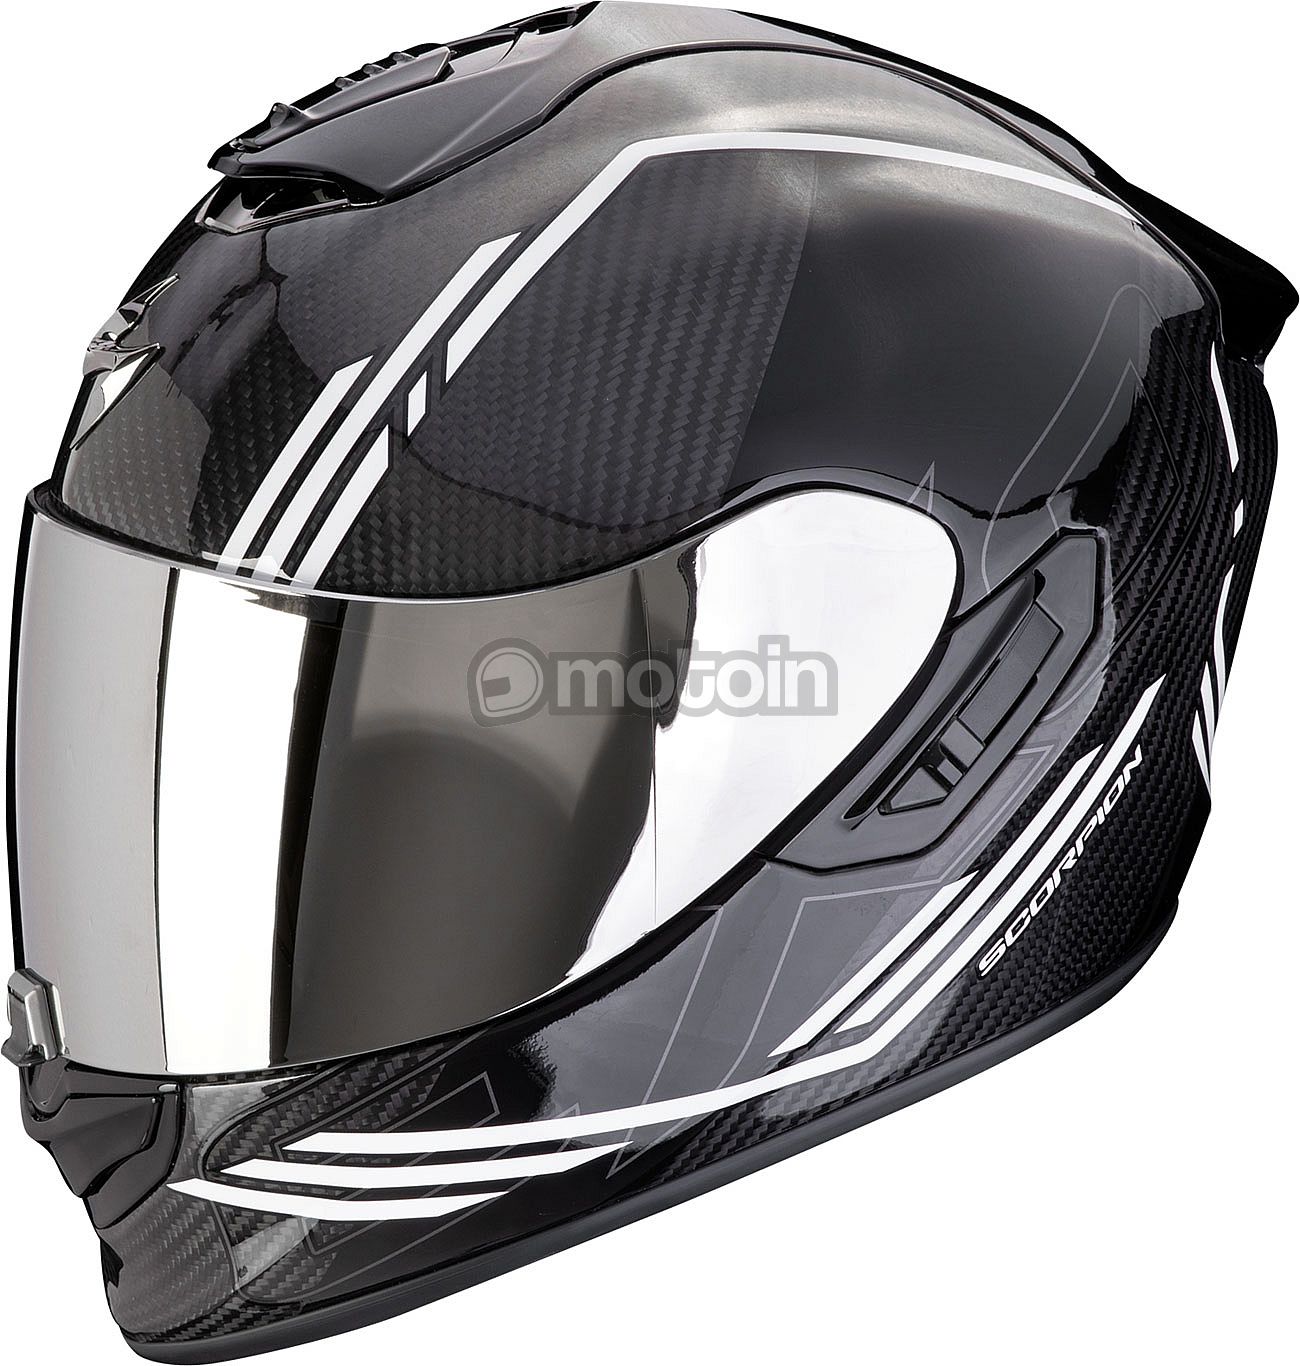 Scorpion EXO-1400 Evo Air II Carbon Reika, capacete integral